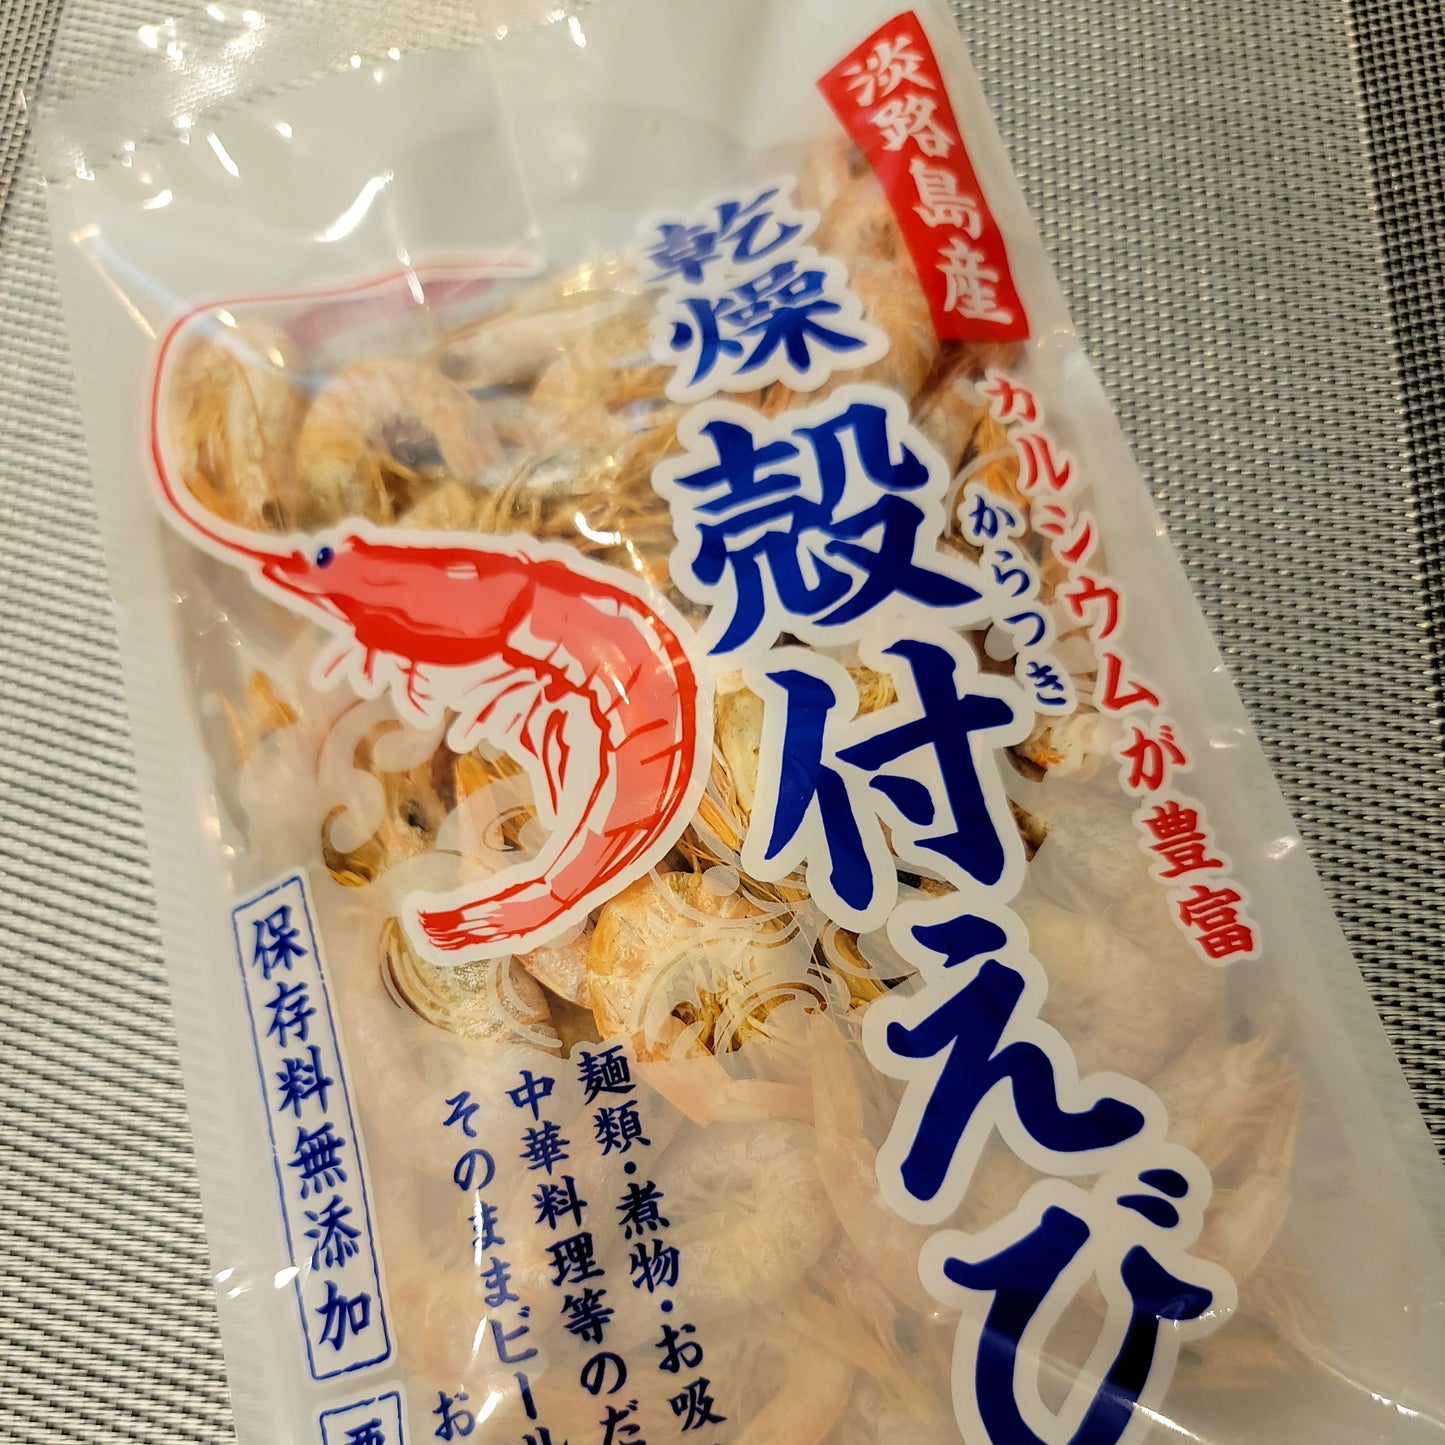 Awaji Island Dried Shrimp 淡路島有殻蝦乾